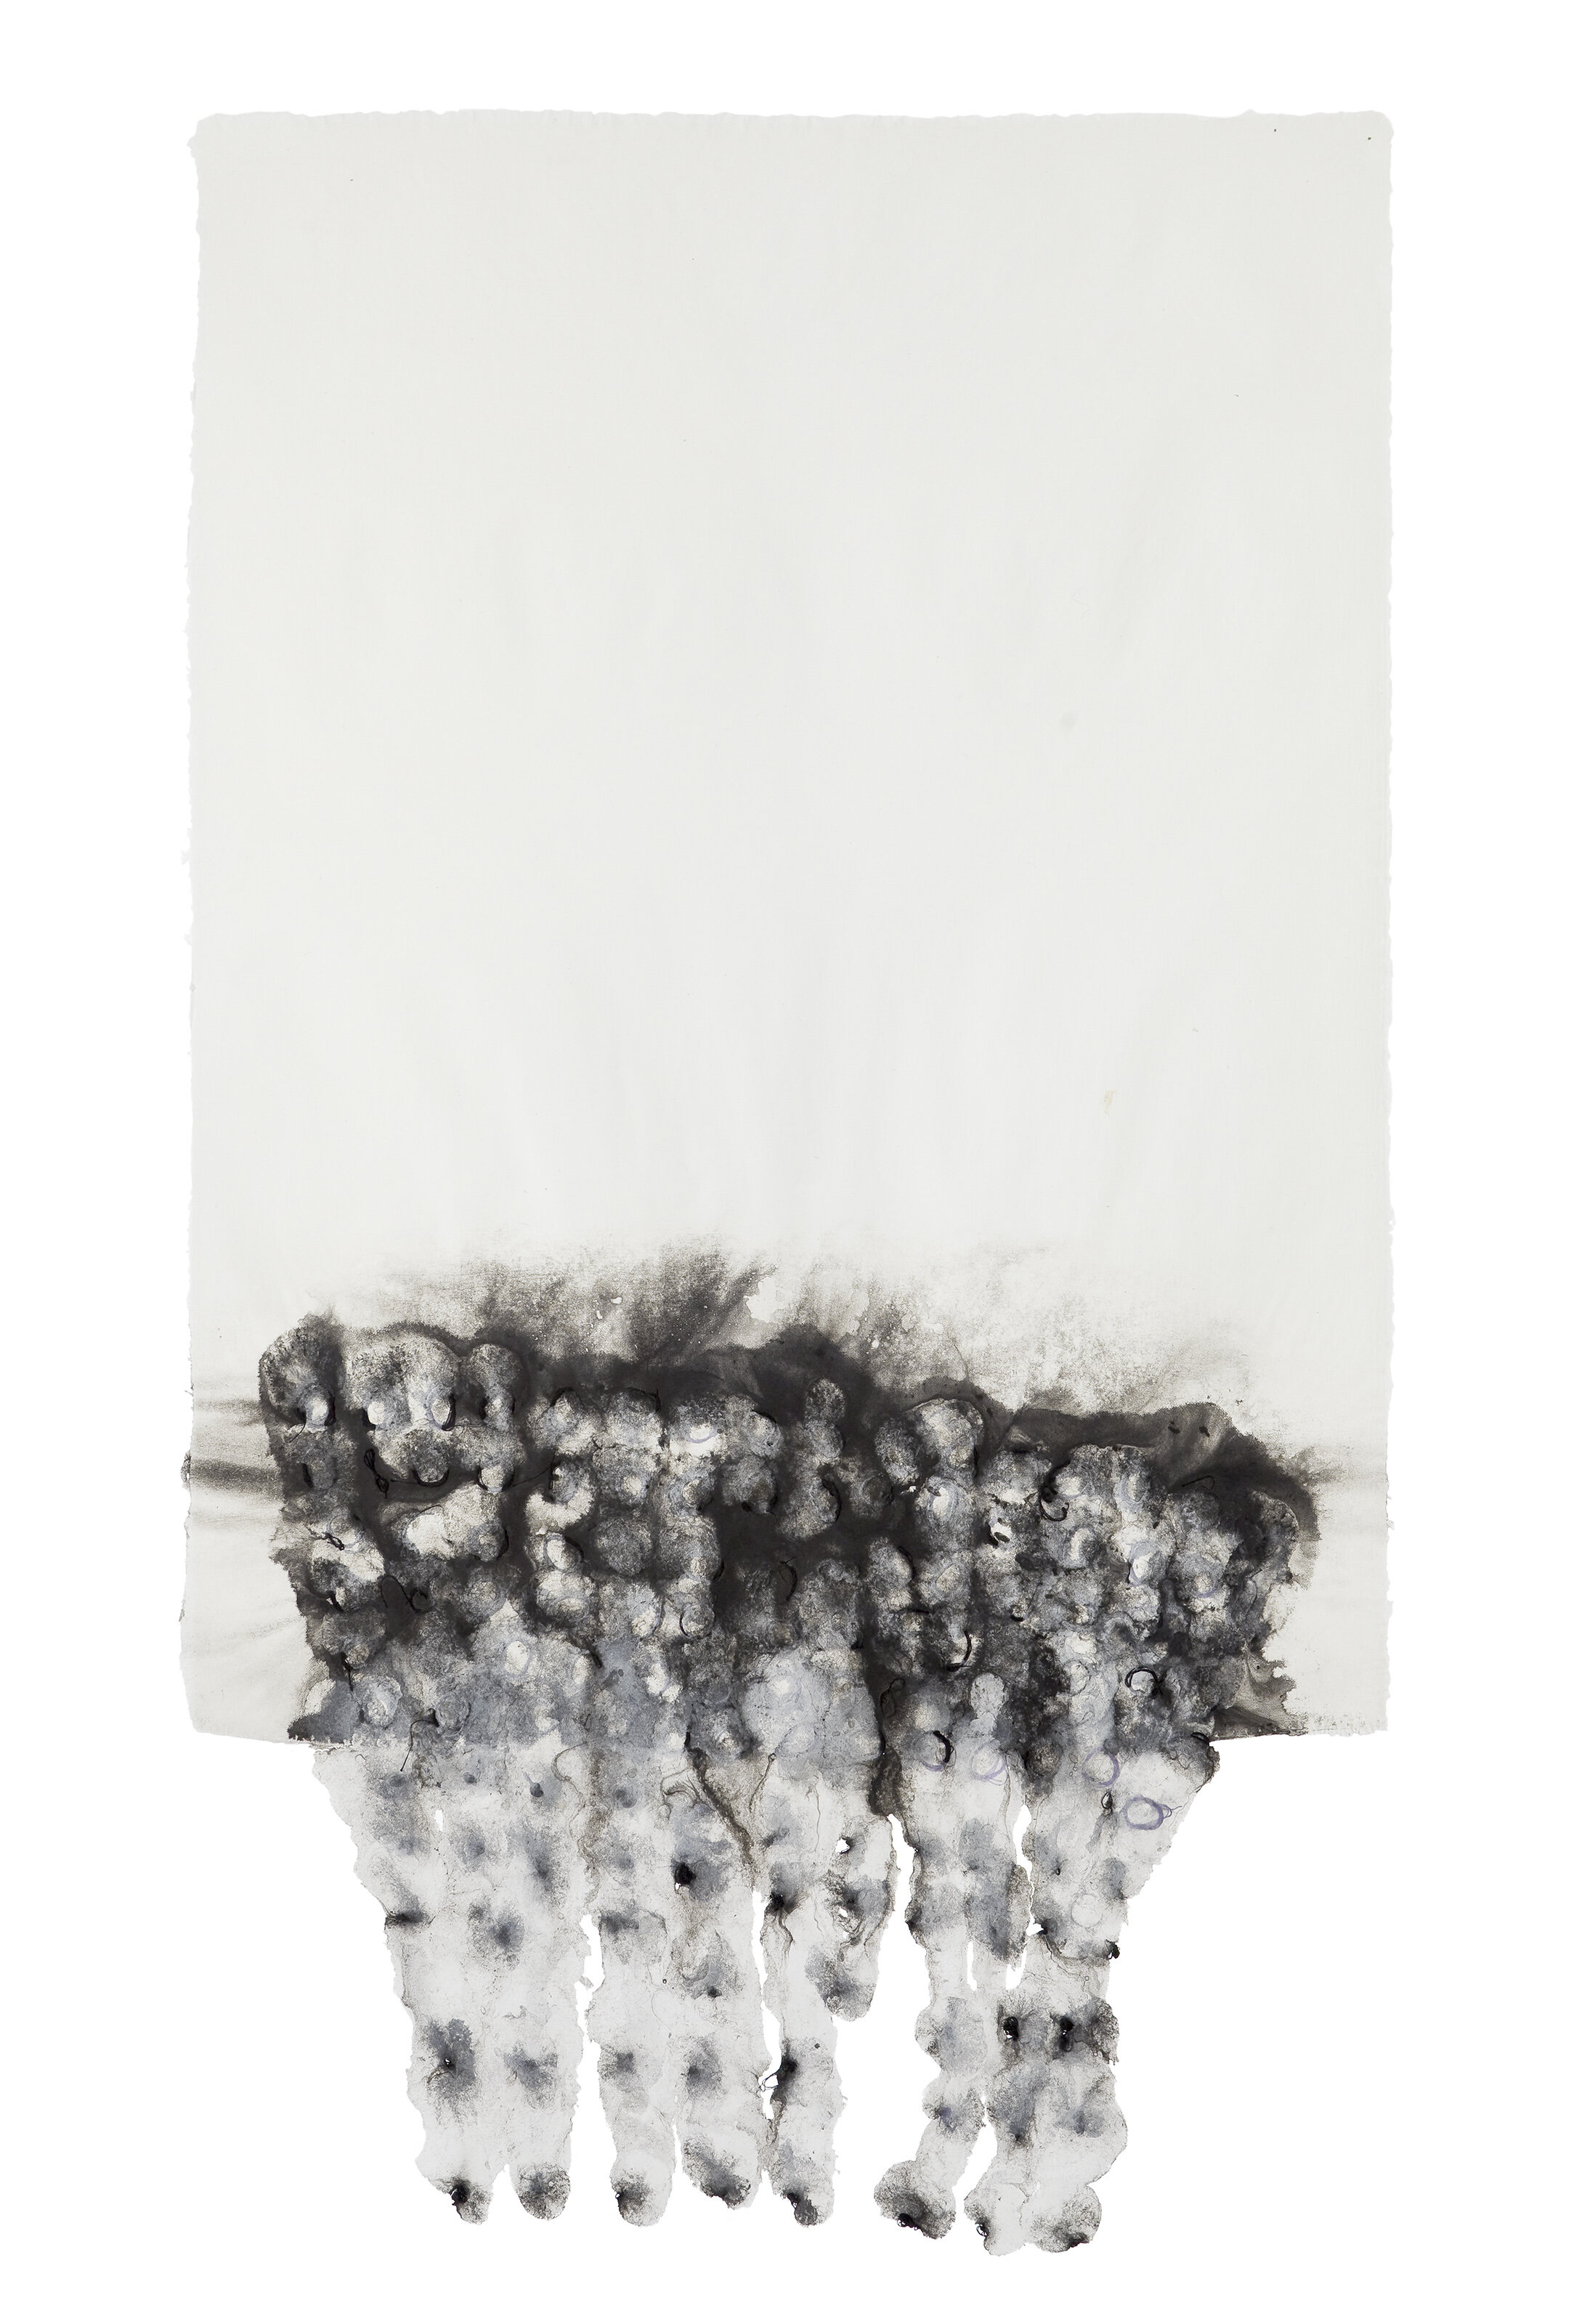  Ursula Von Rydingsvard,  Untitled (Inventory 5496) , 2009, Thread, pigment, linen handmade paper, 40 x 22.5 inches. 